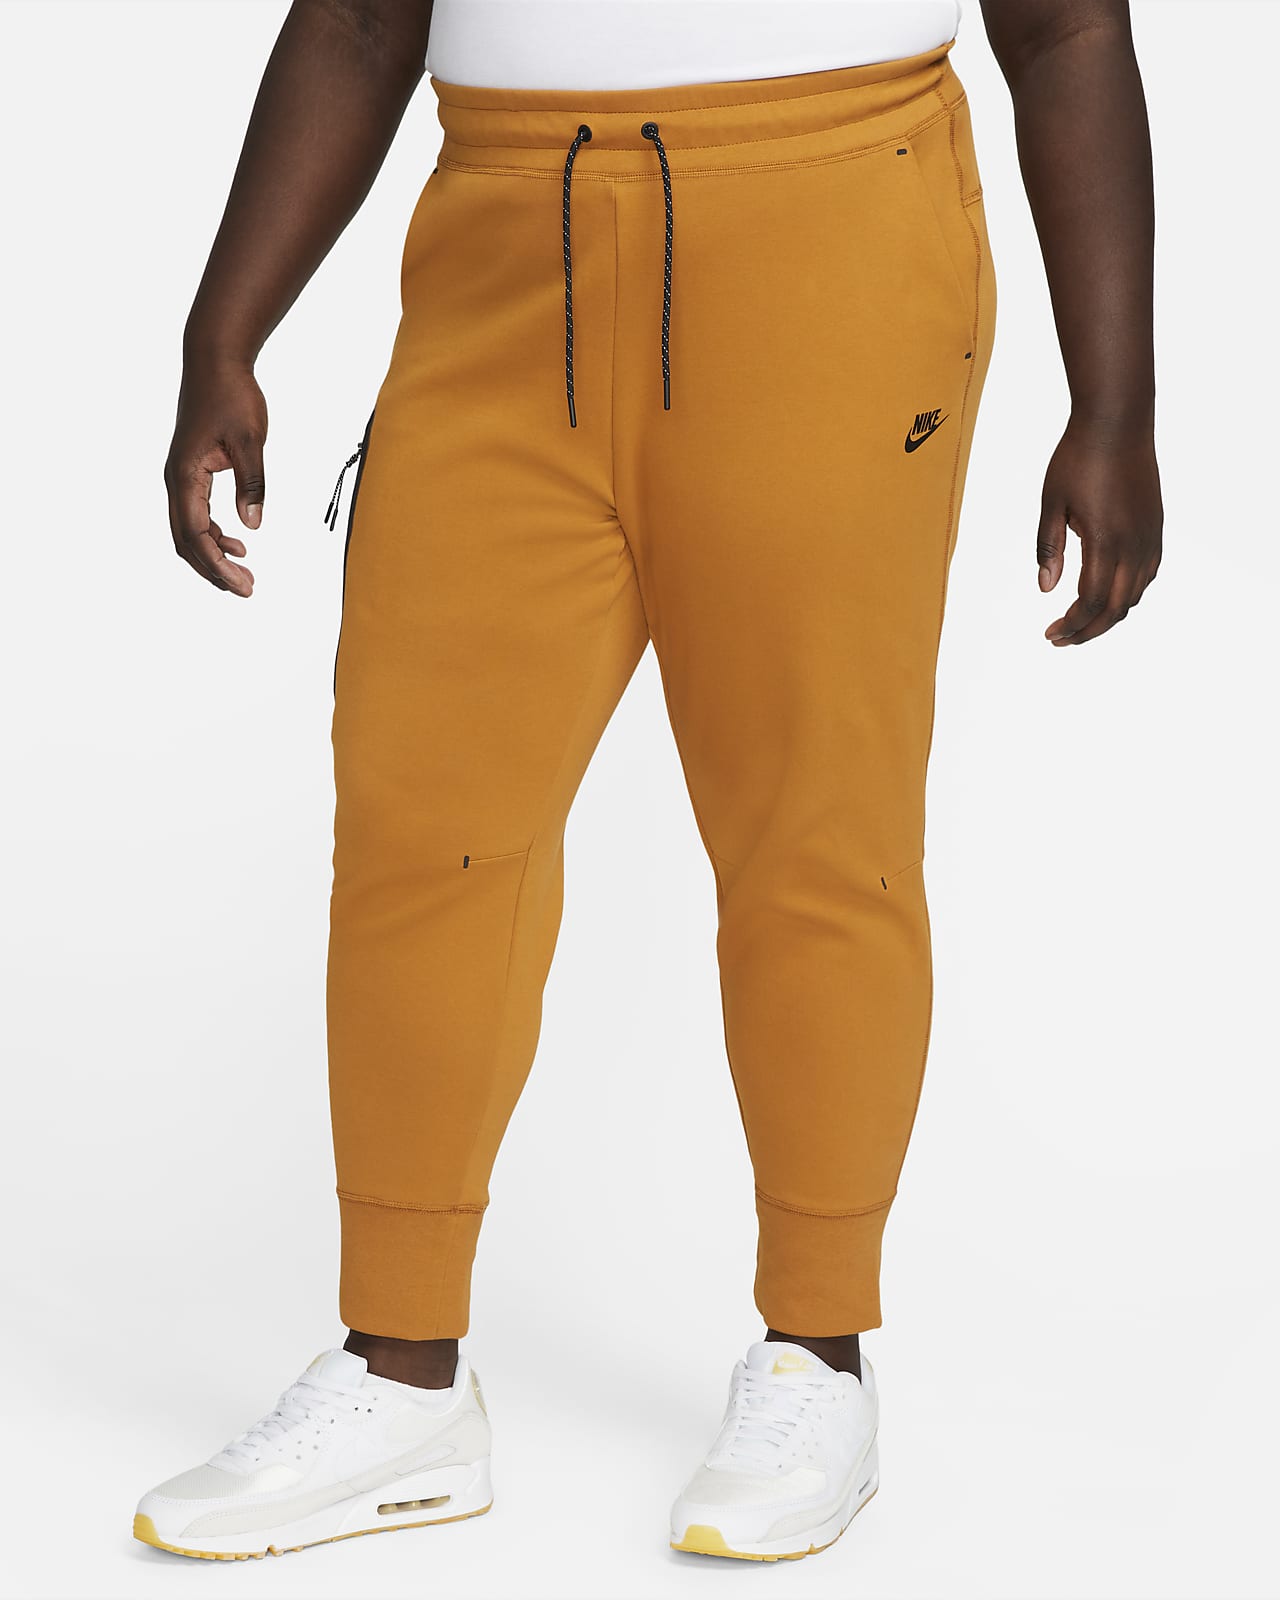 Tech Fleece Women's Pants (Plus Size). Nike.com